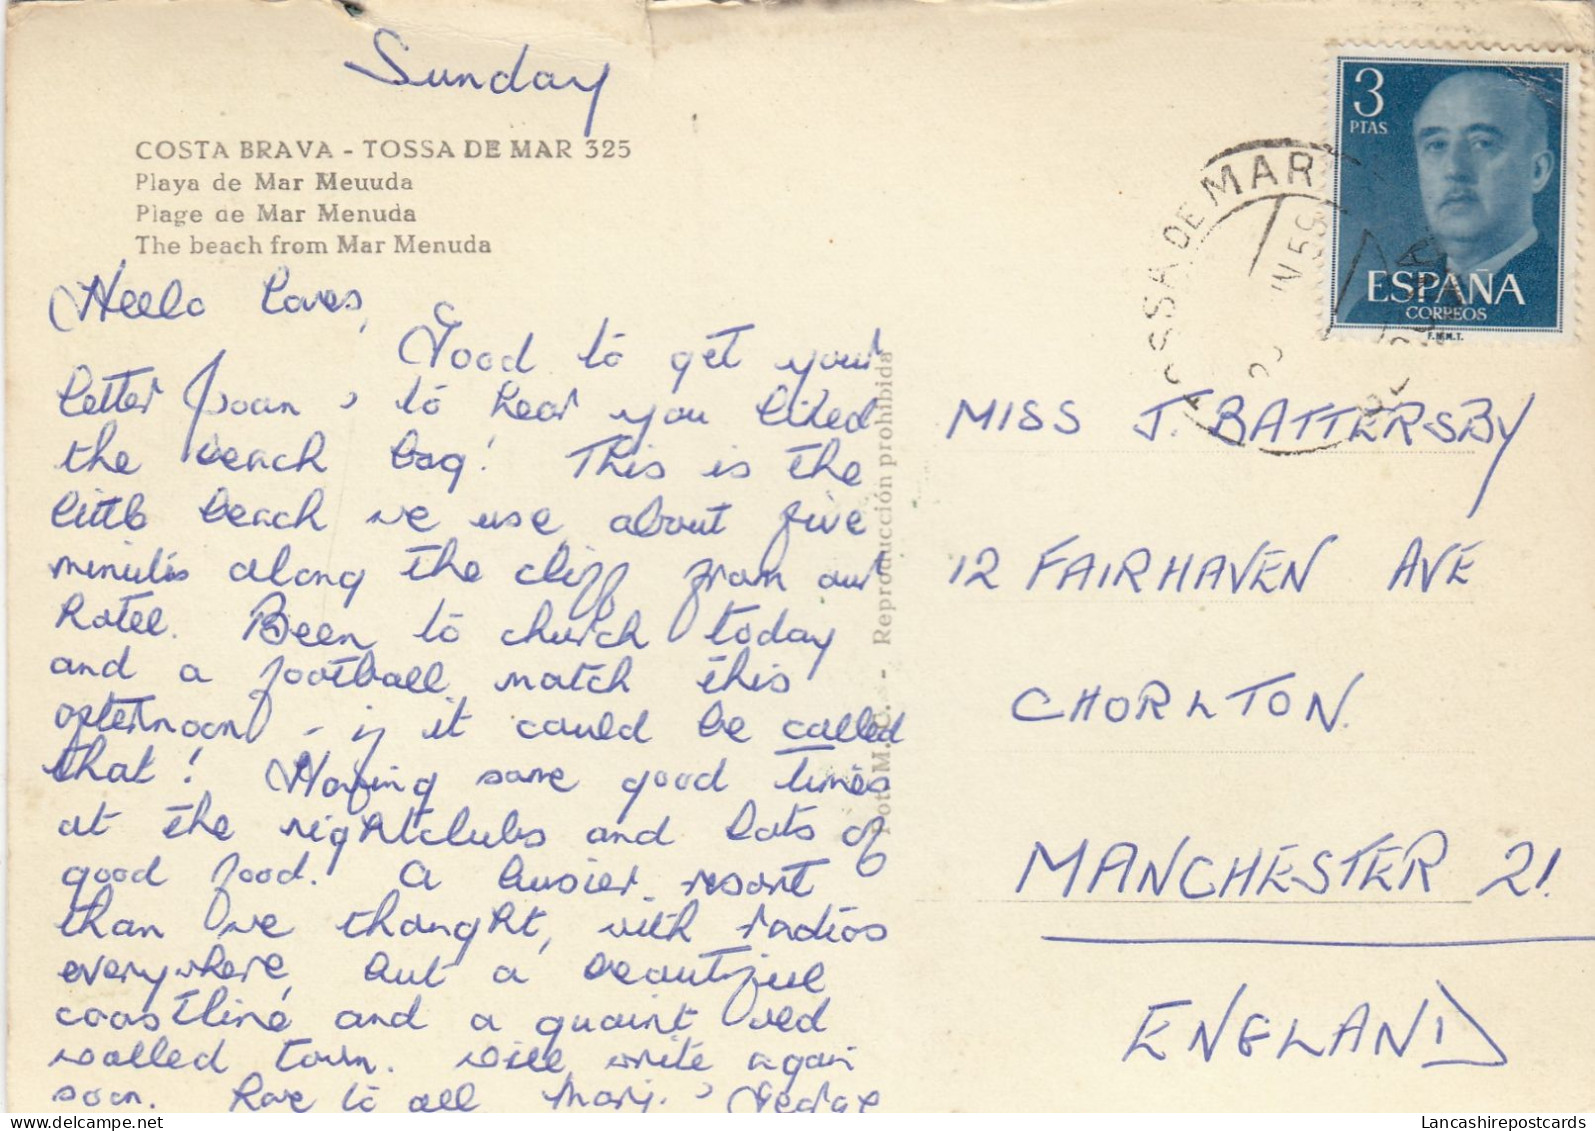 Postcard Genealogy Joan Battersby Chorlton Manchester PU 1959 My Ref B26478 - Genealogie